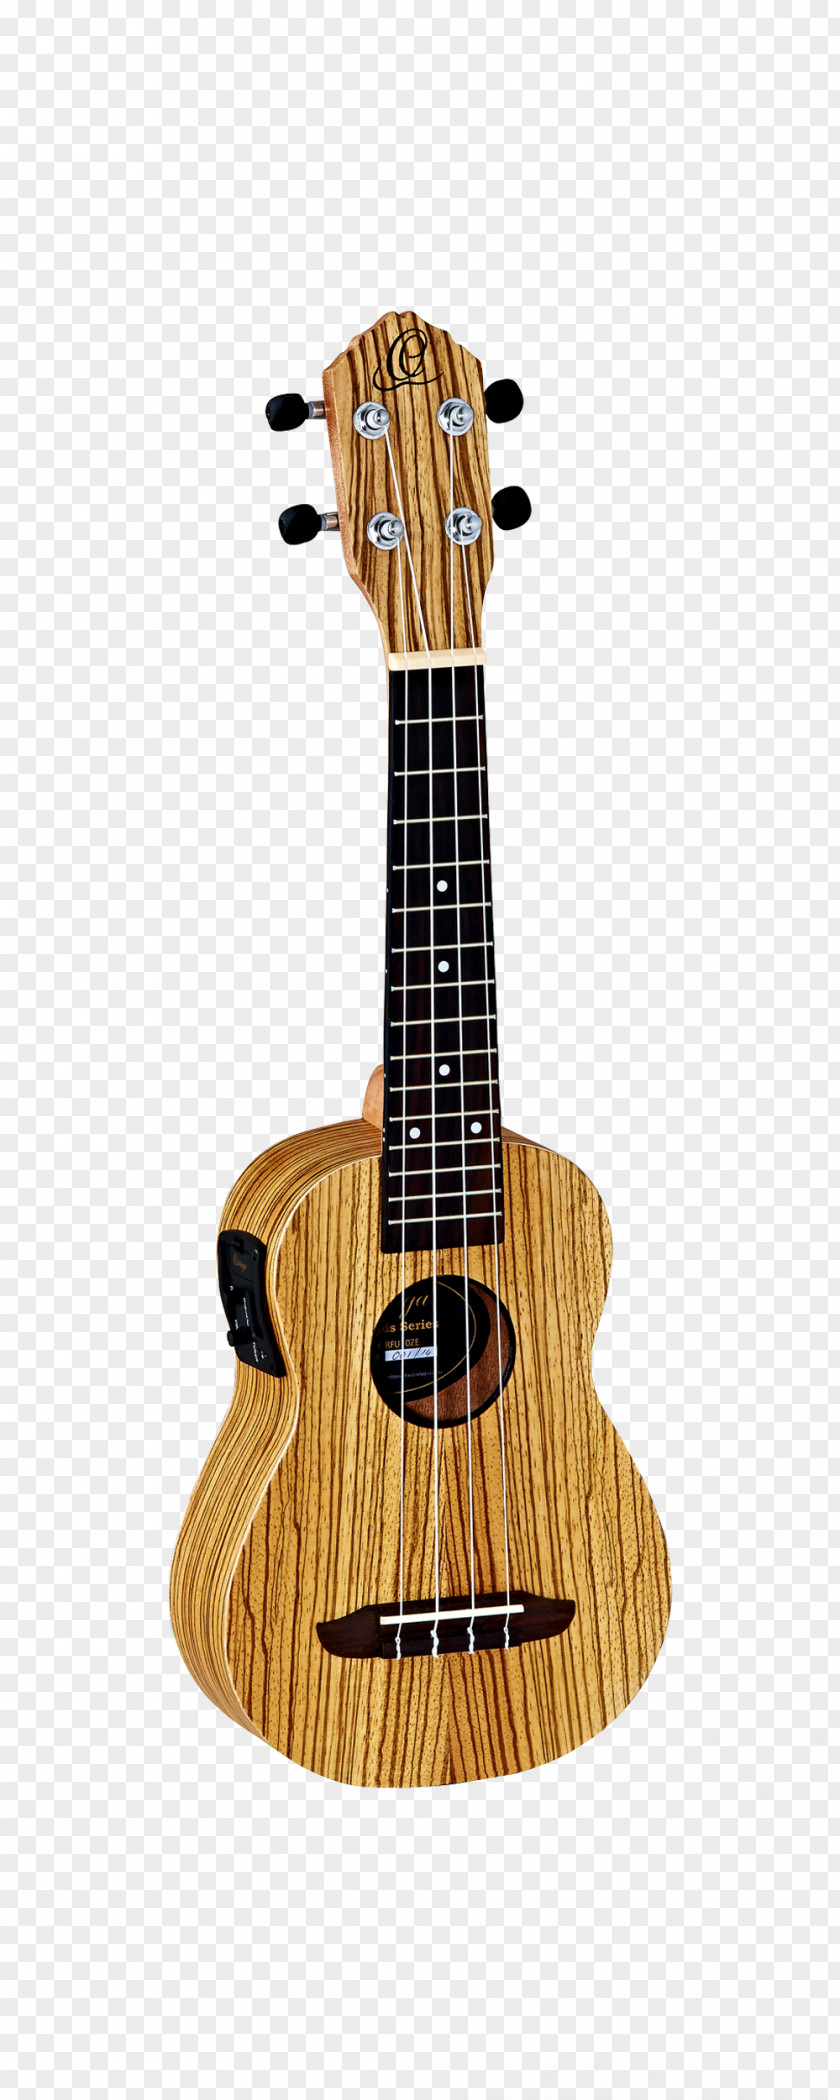 Amancio Ortega Ukulele Acoustic Guitar Musical Instruments Acoustic-electric PNG